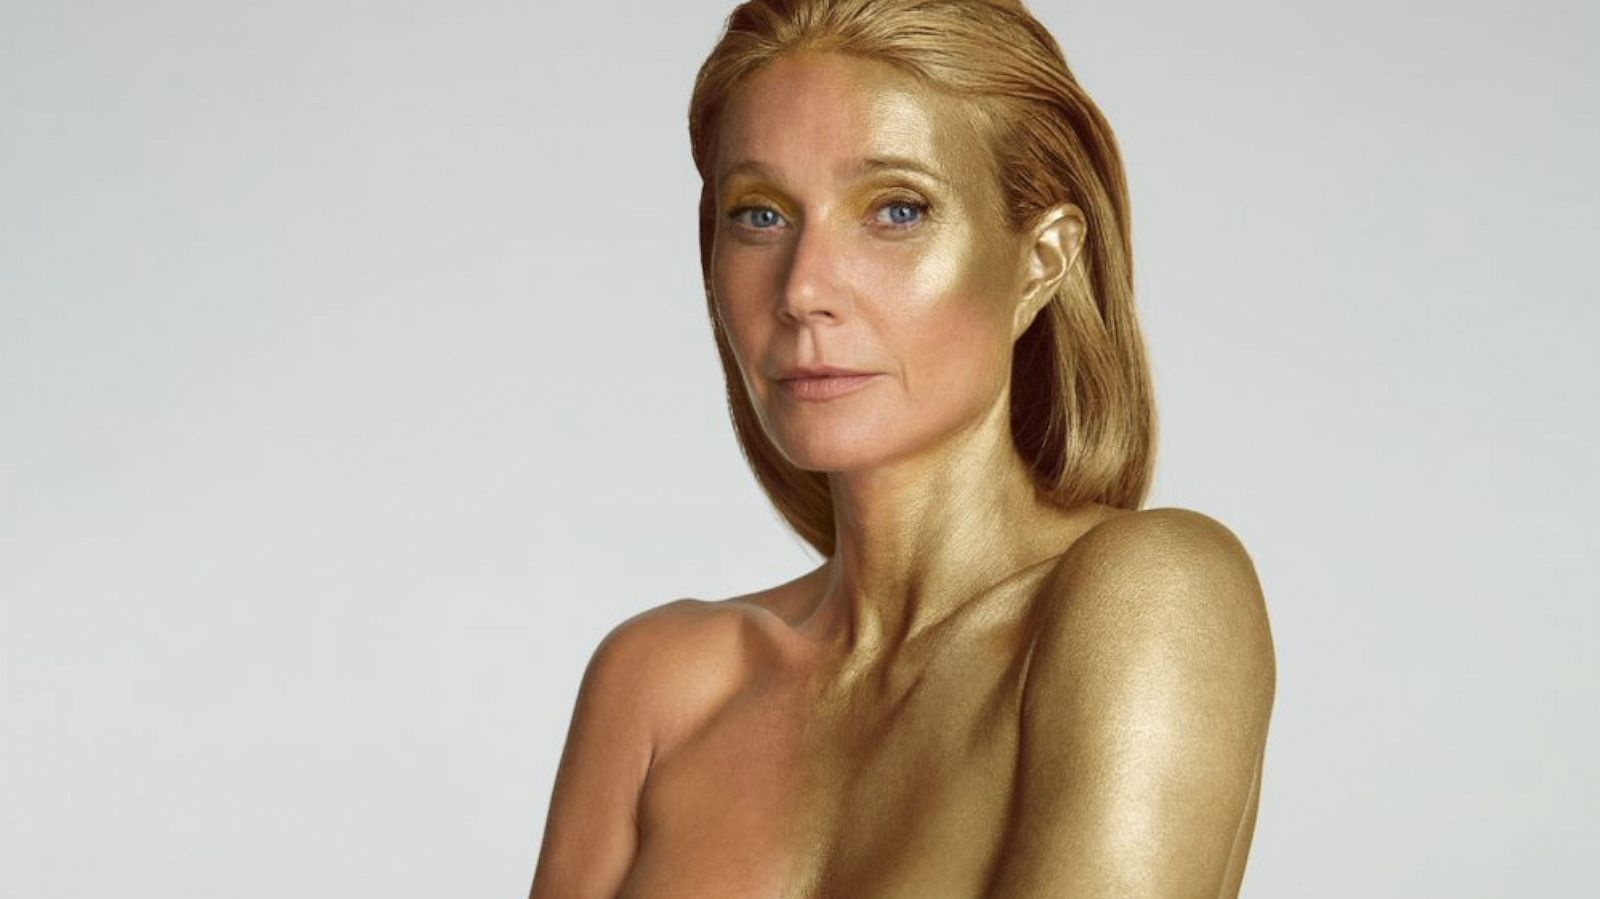 Gwyneth Paltrow poses nude in gold body